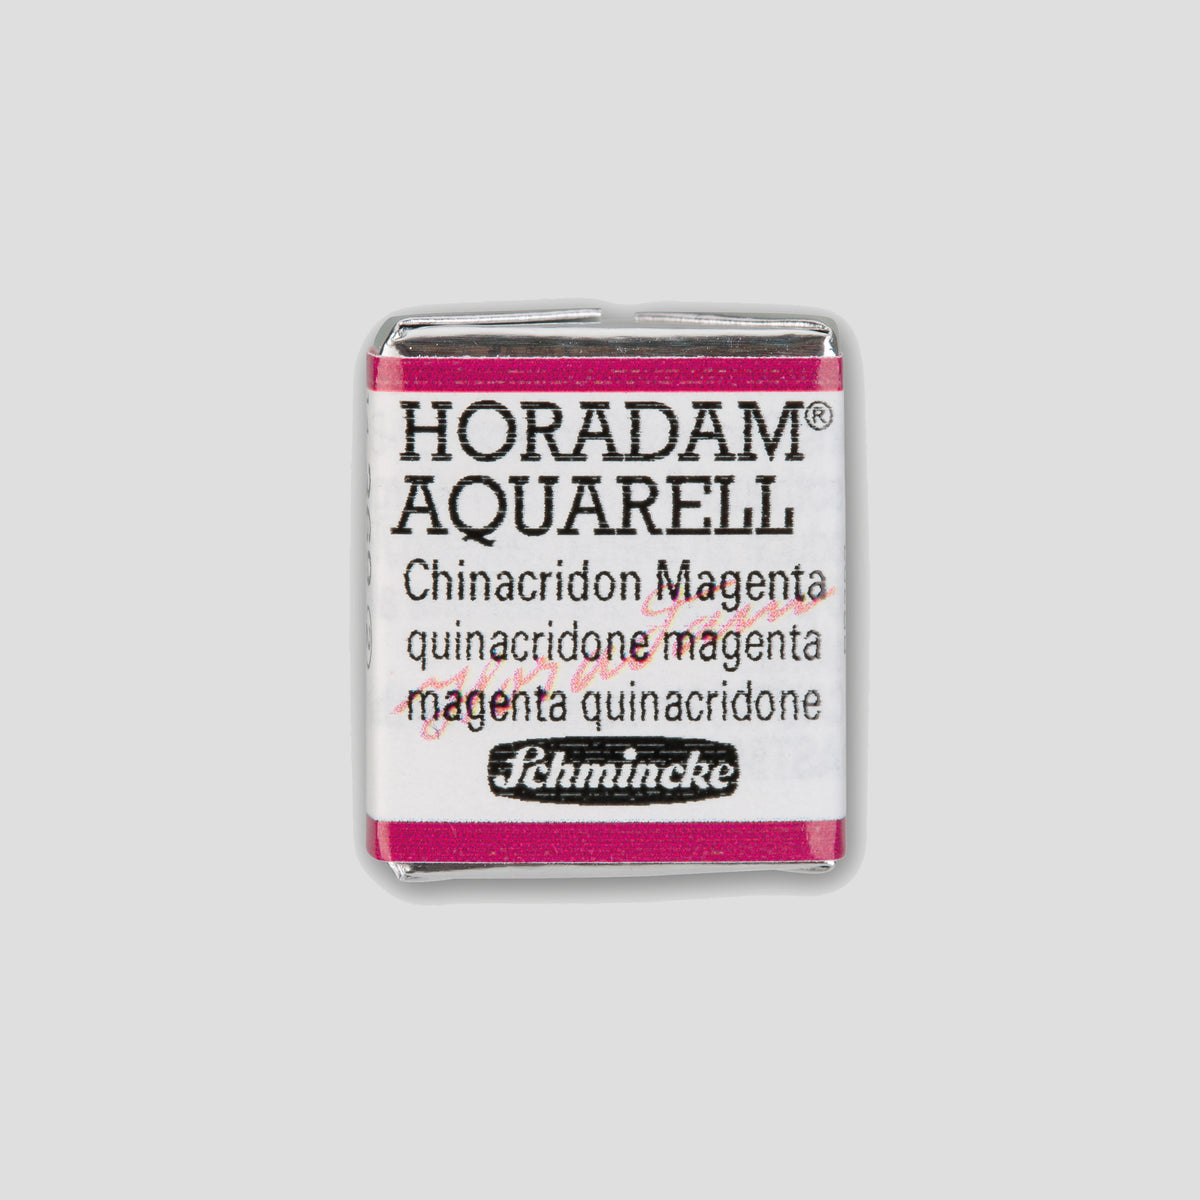 Schmincke Horadam® Halbpfanne Chinacridon Magenta